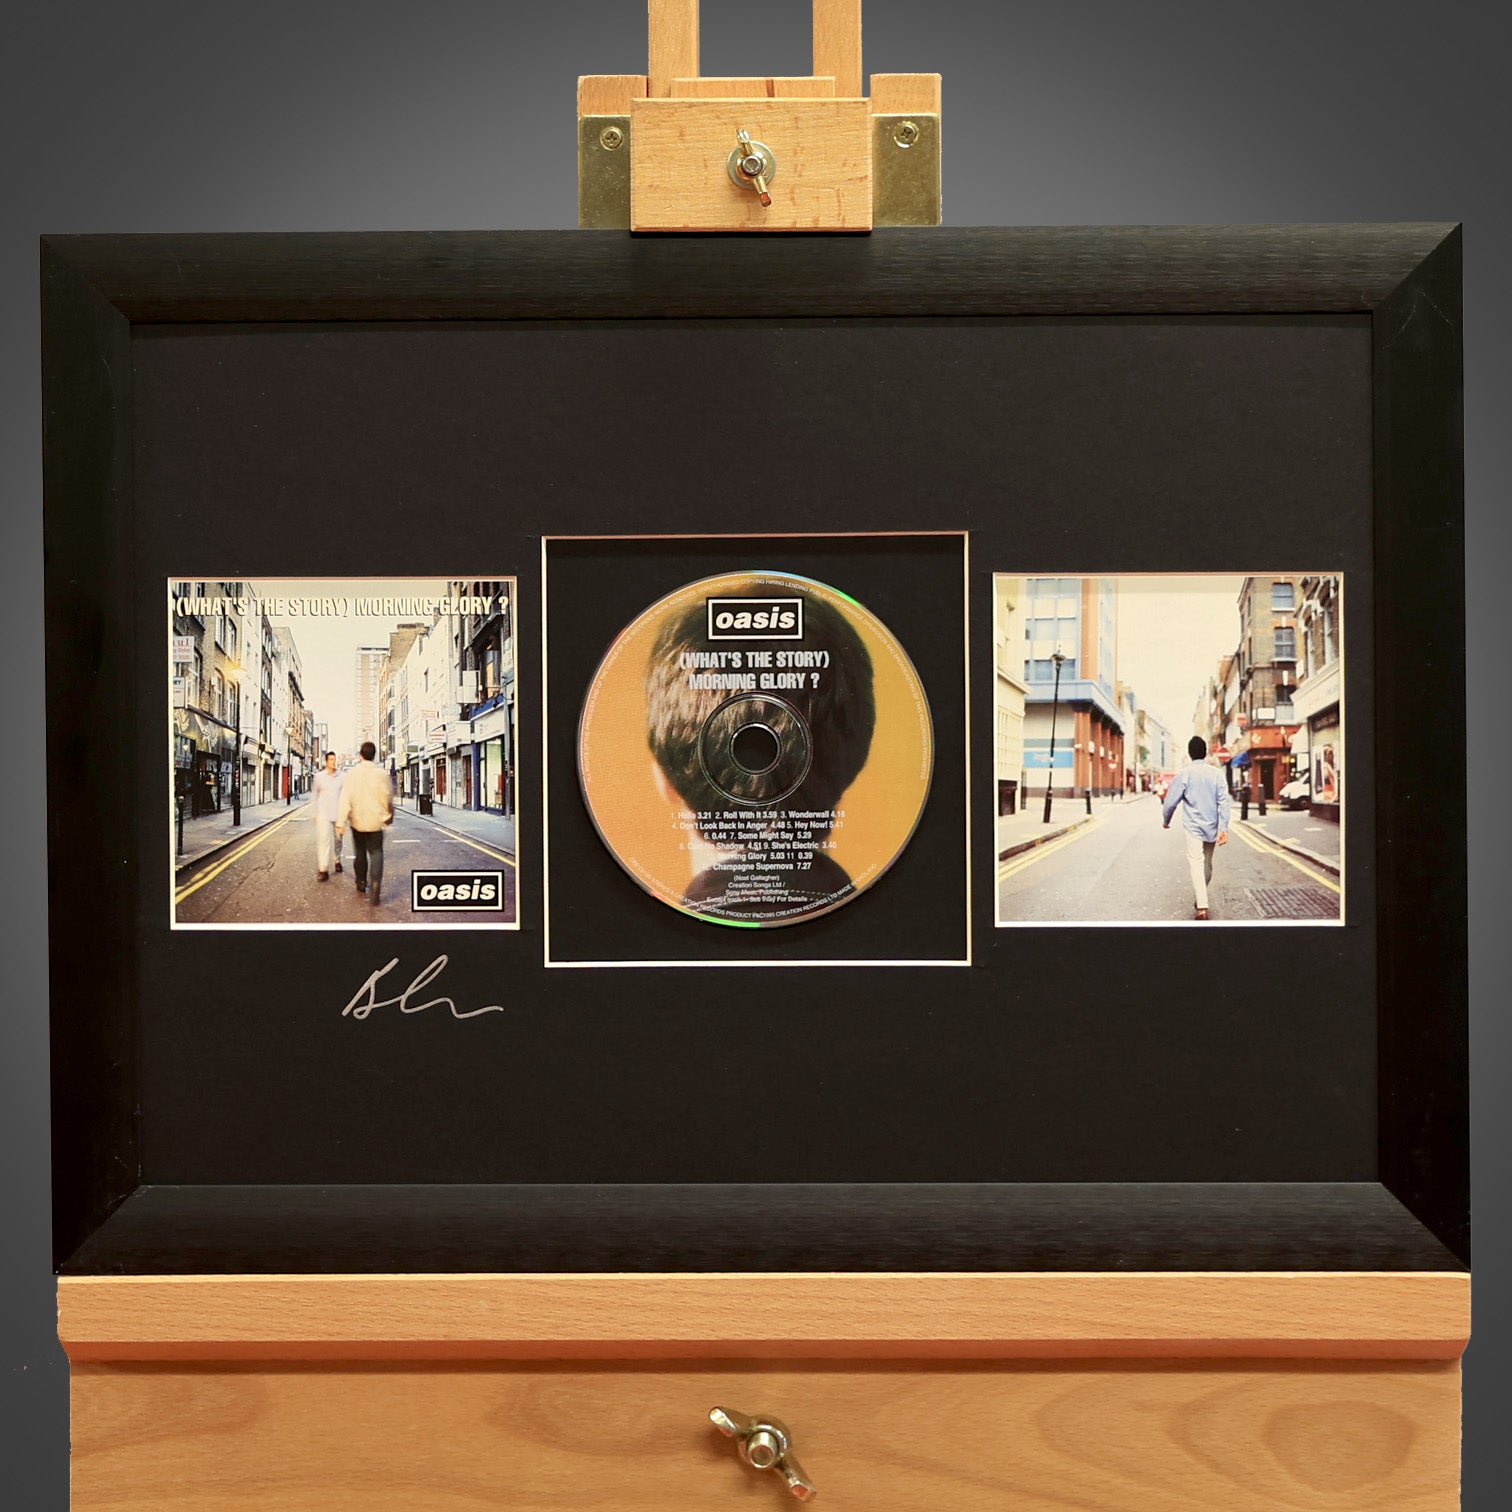 Oasis - Morning Glory Signed & Framed CD - New Item